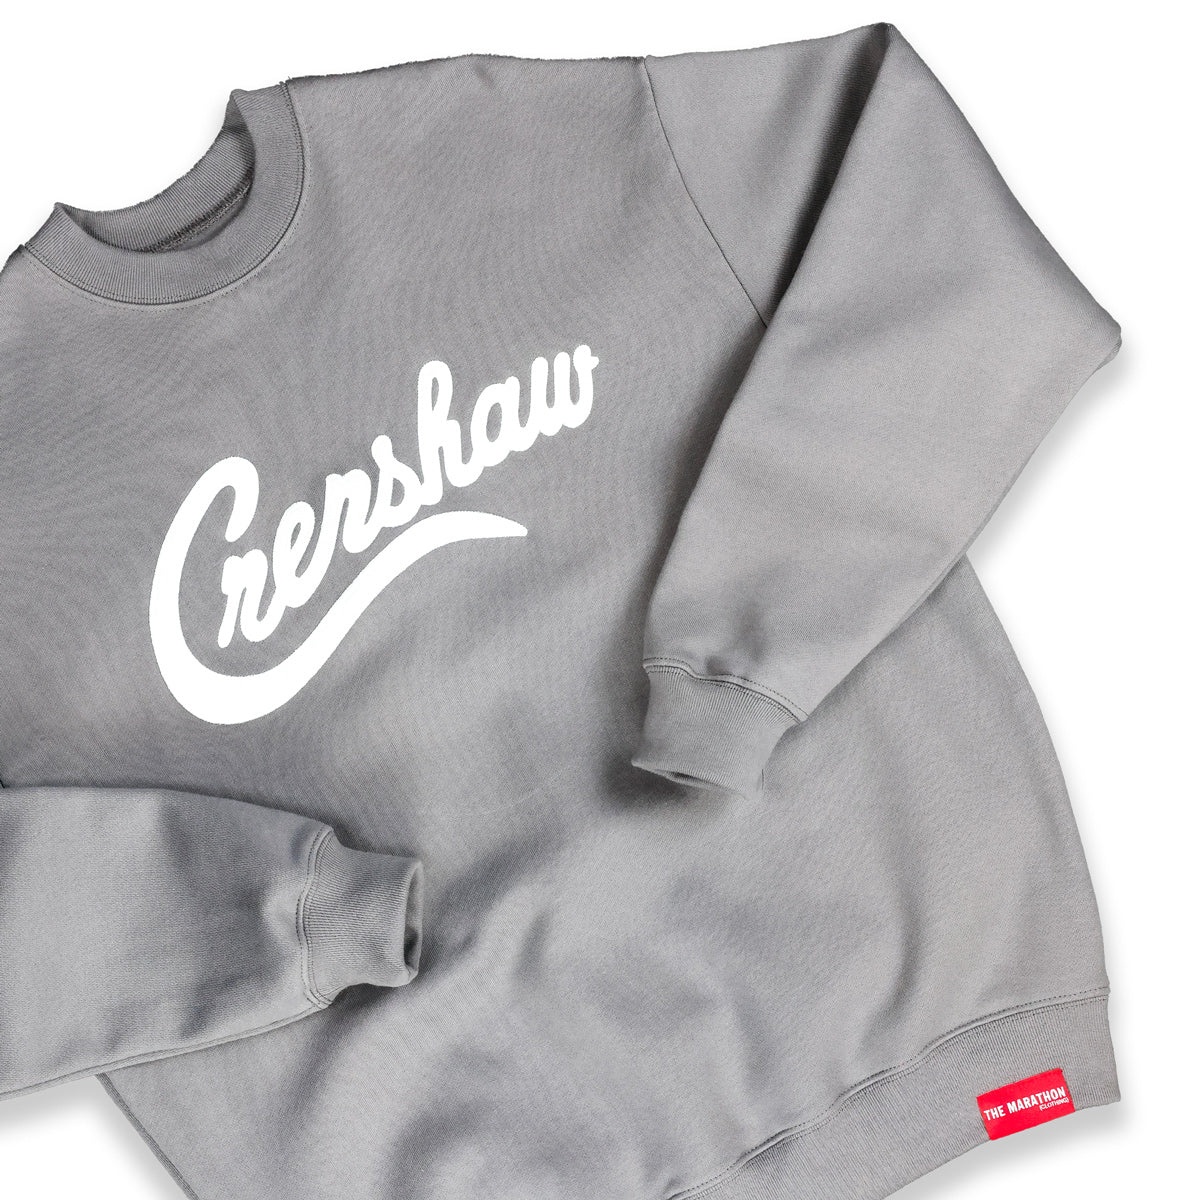 Limited Edition Ultra Crenshaw Crewneck - Slate Grey/White - Detail 1